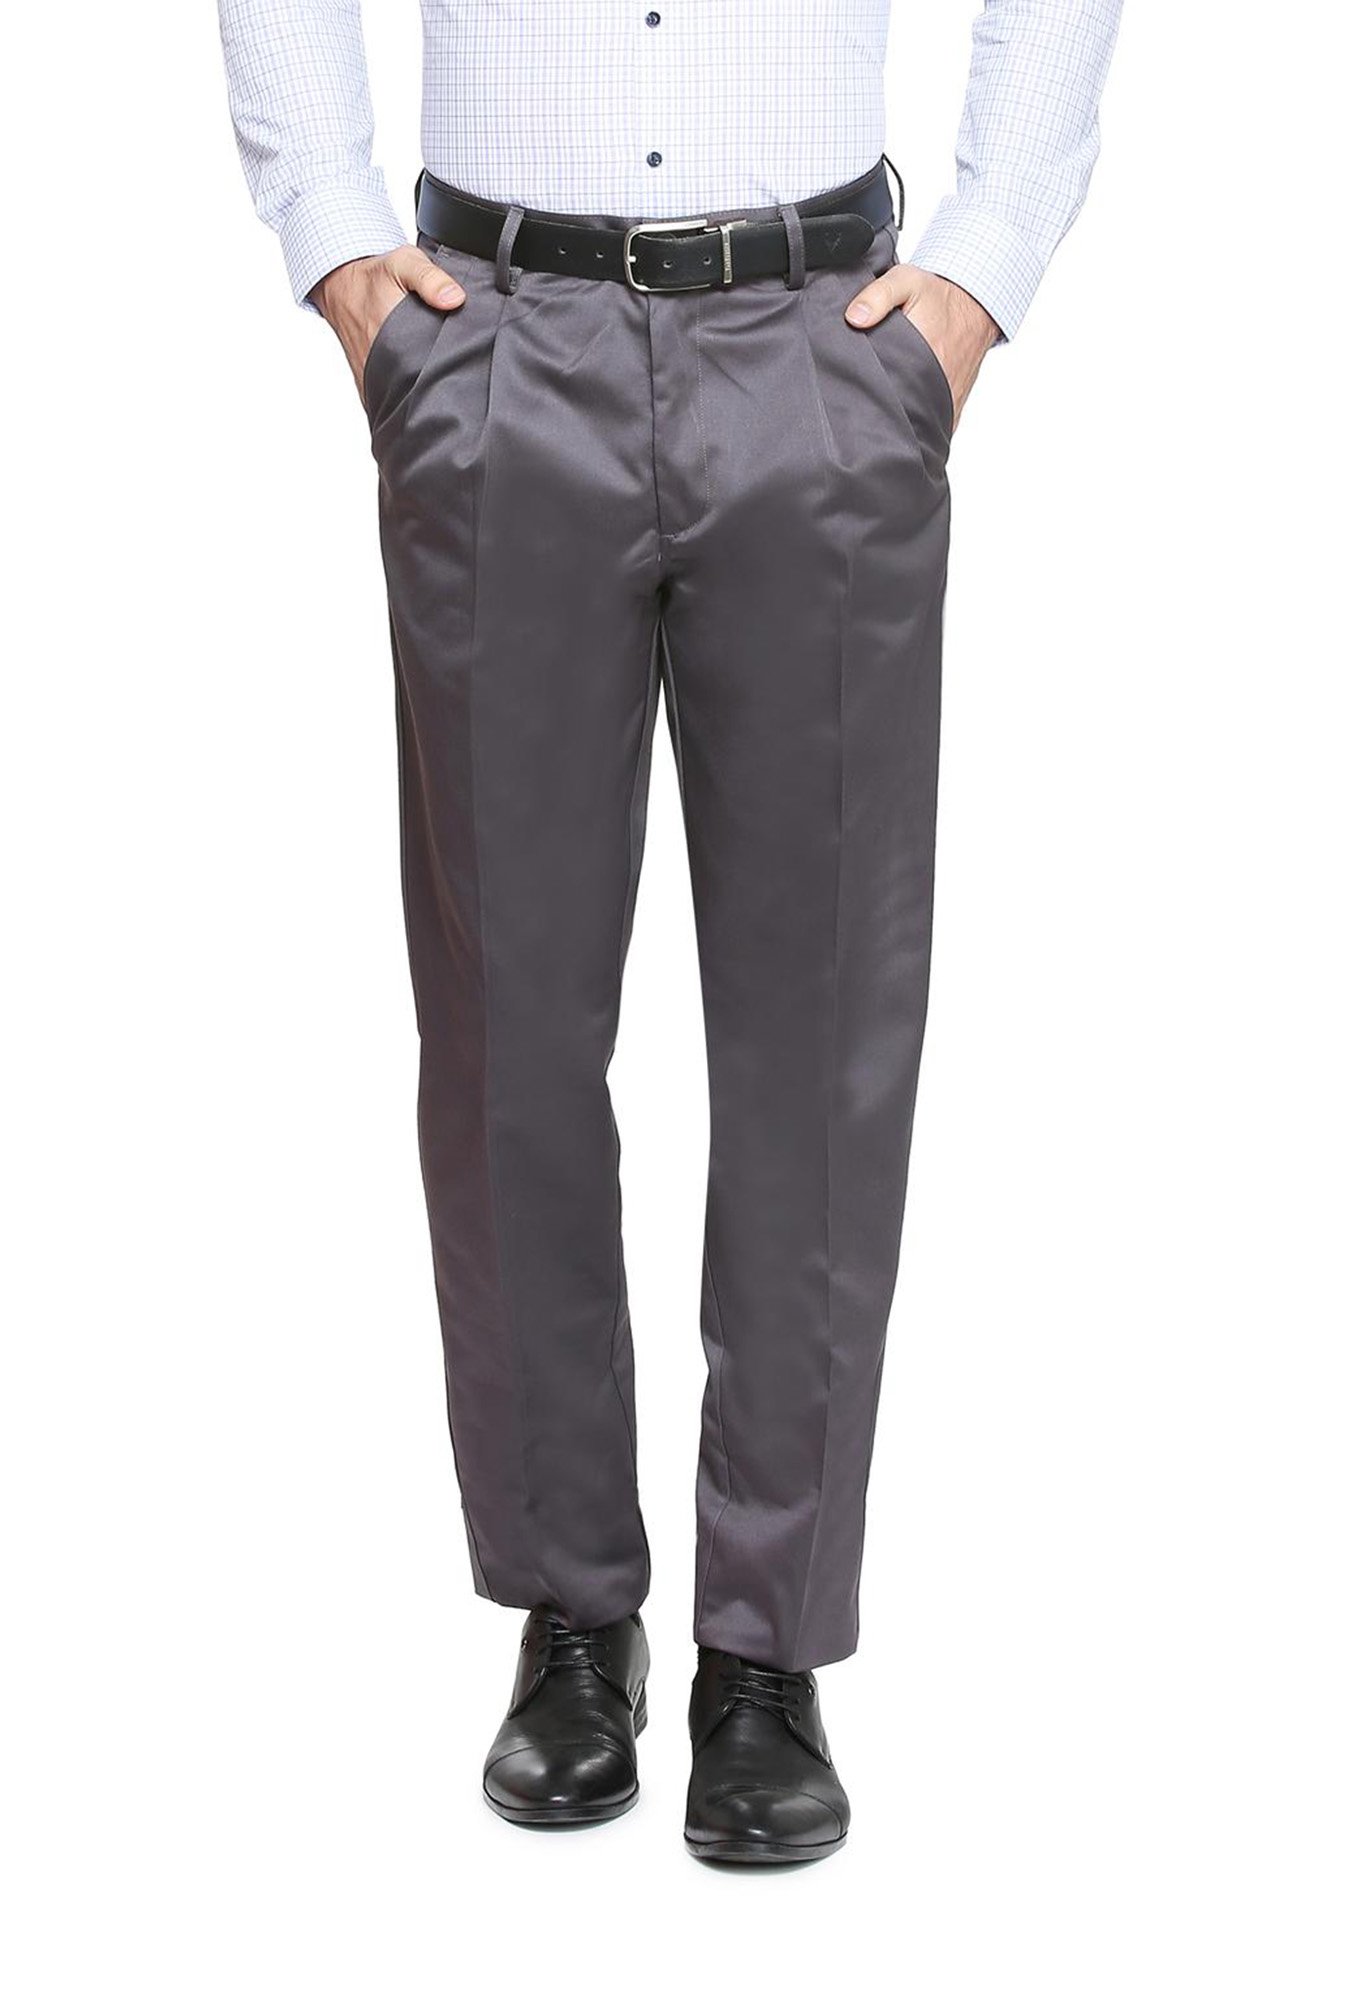 Buy Men Cream Solid Regular Fit Trousers Online - 201066 | Peter England